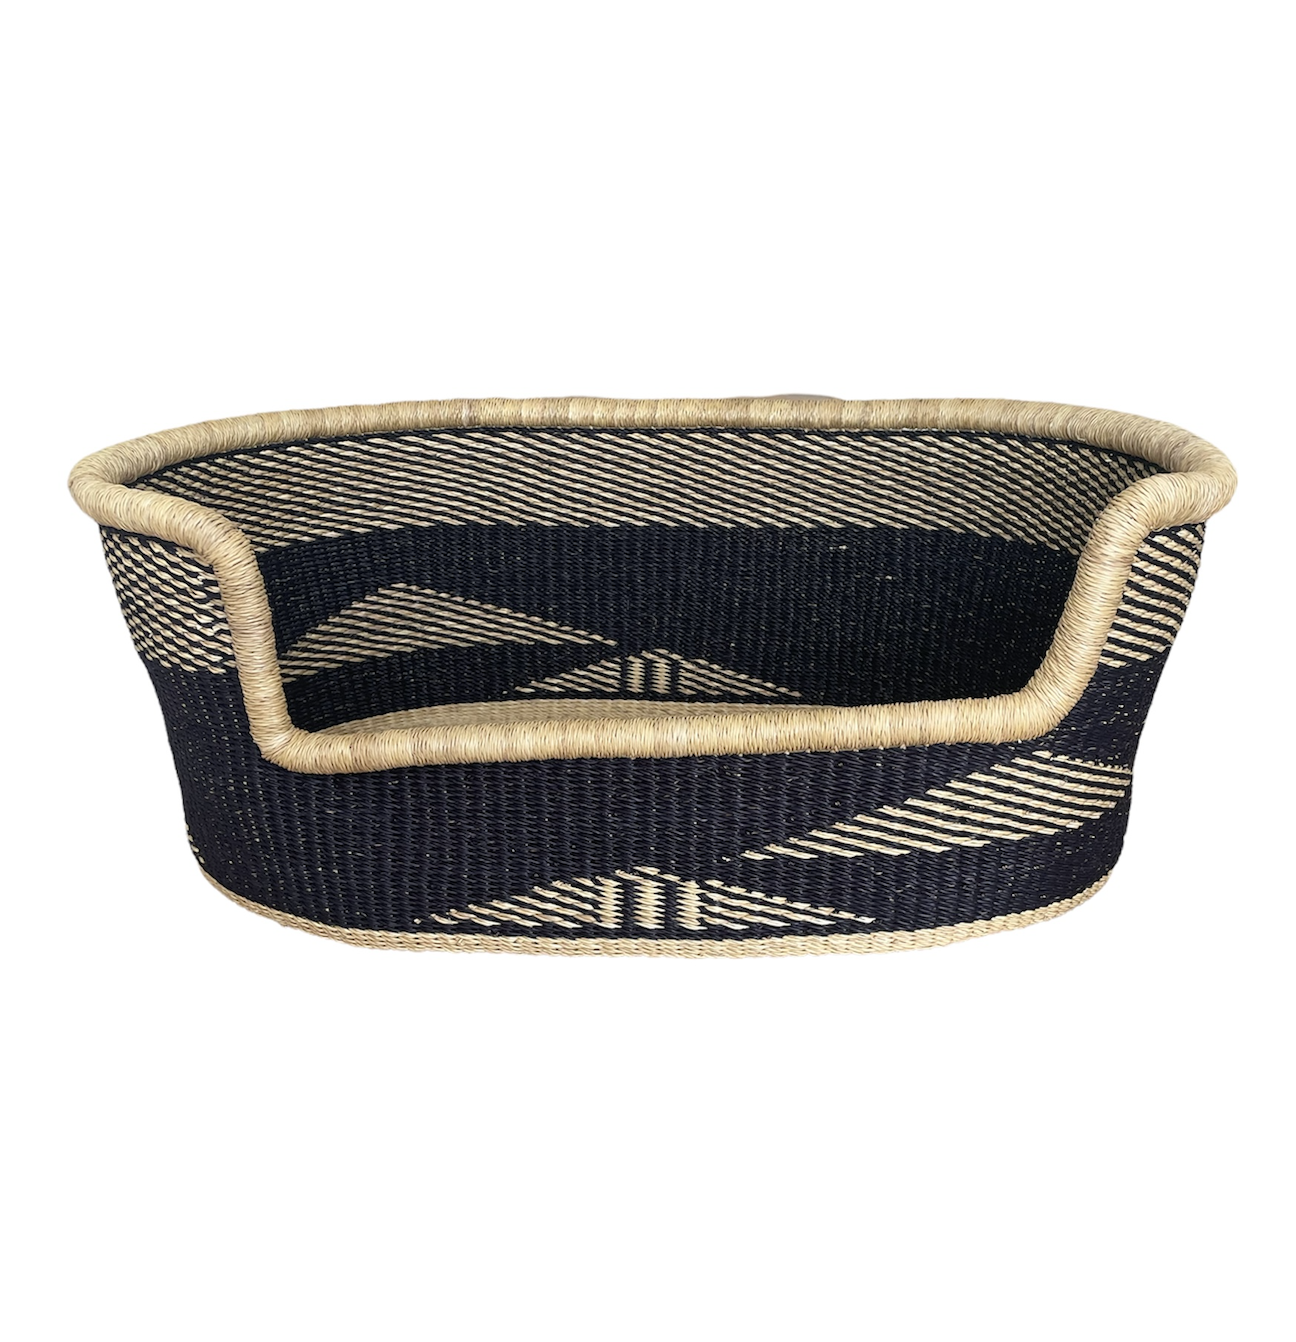 Hand-woven dog basket no. 4